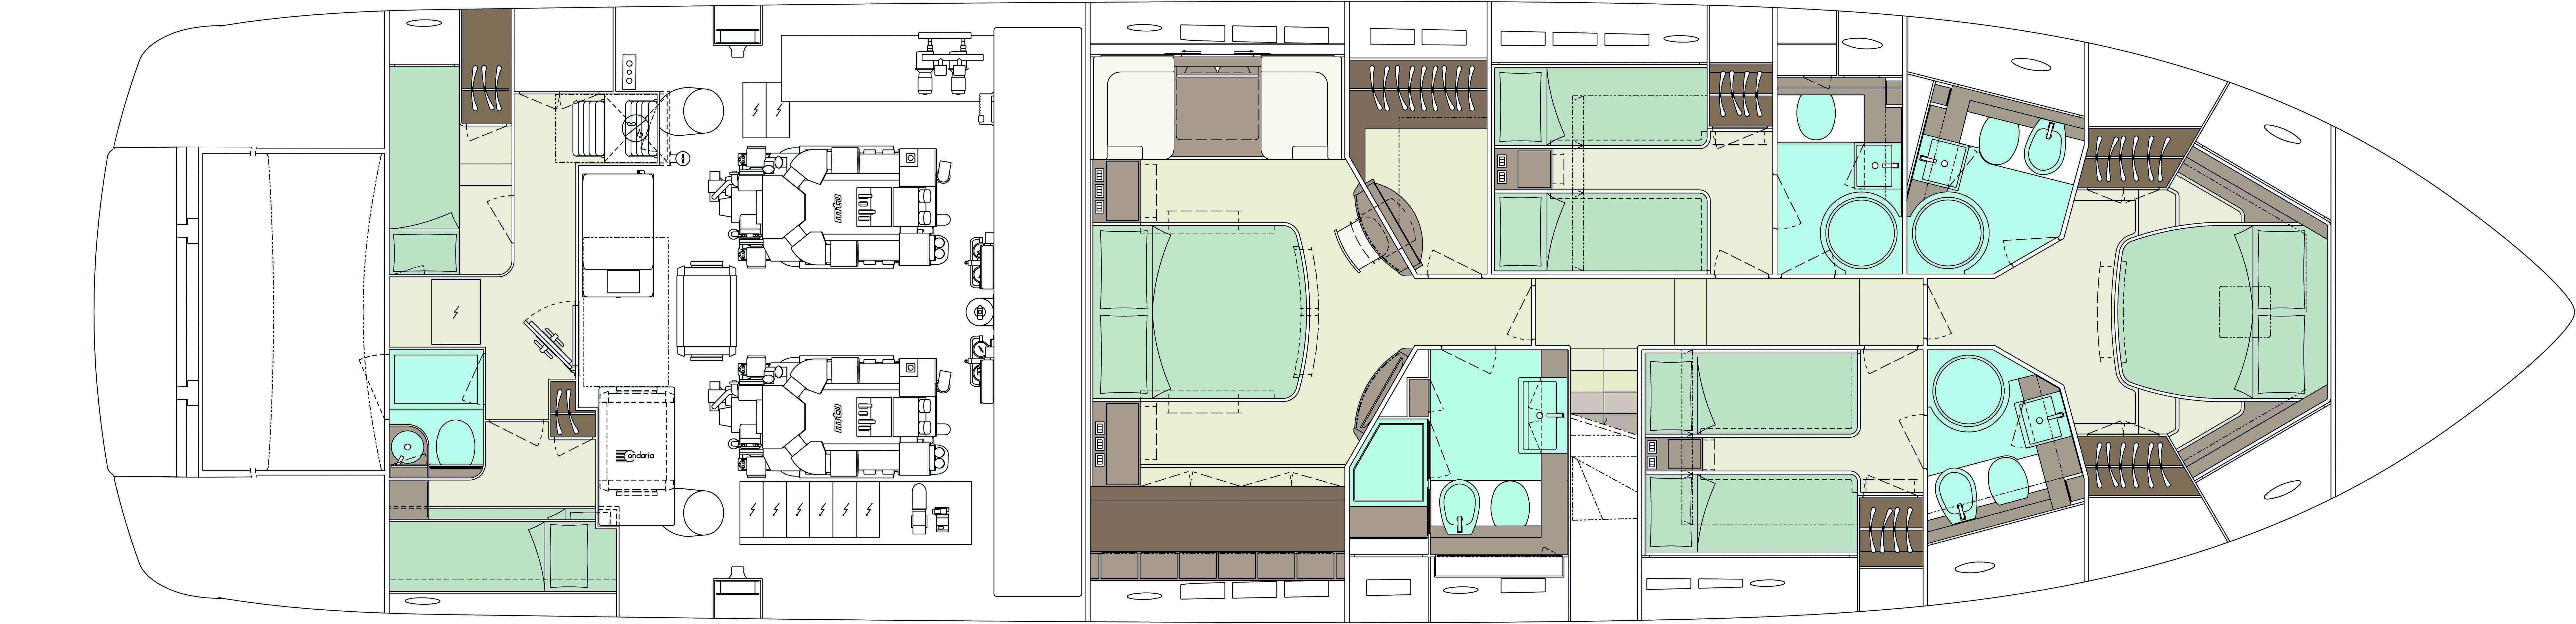 Manufacturer Provided Image: Riva 75' Venere Super Lower deck Layout Plan